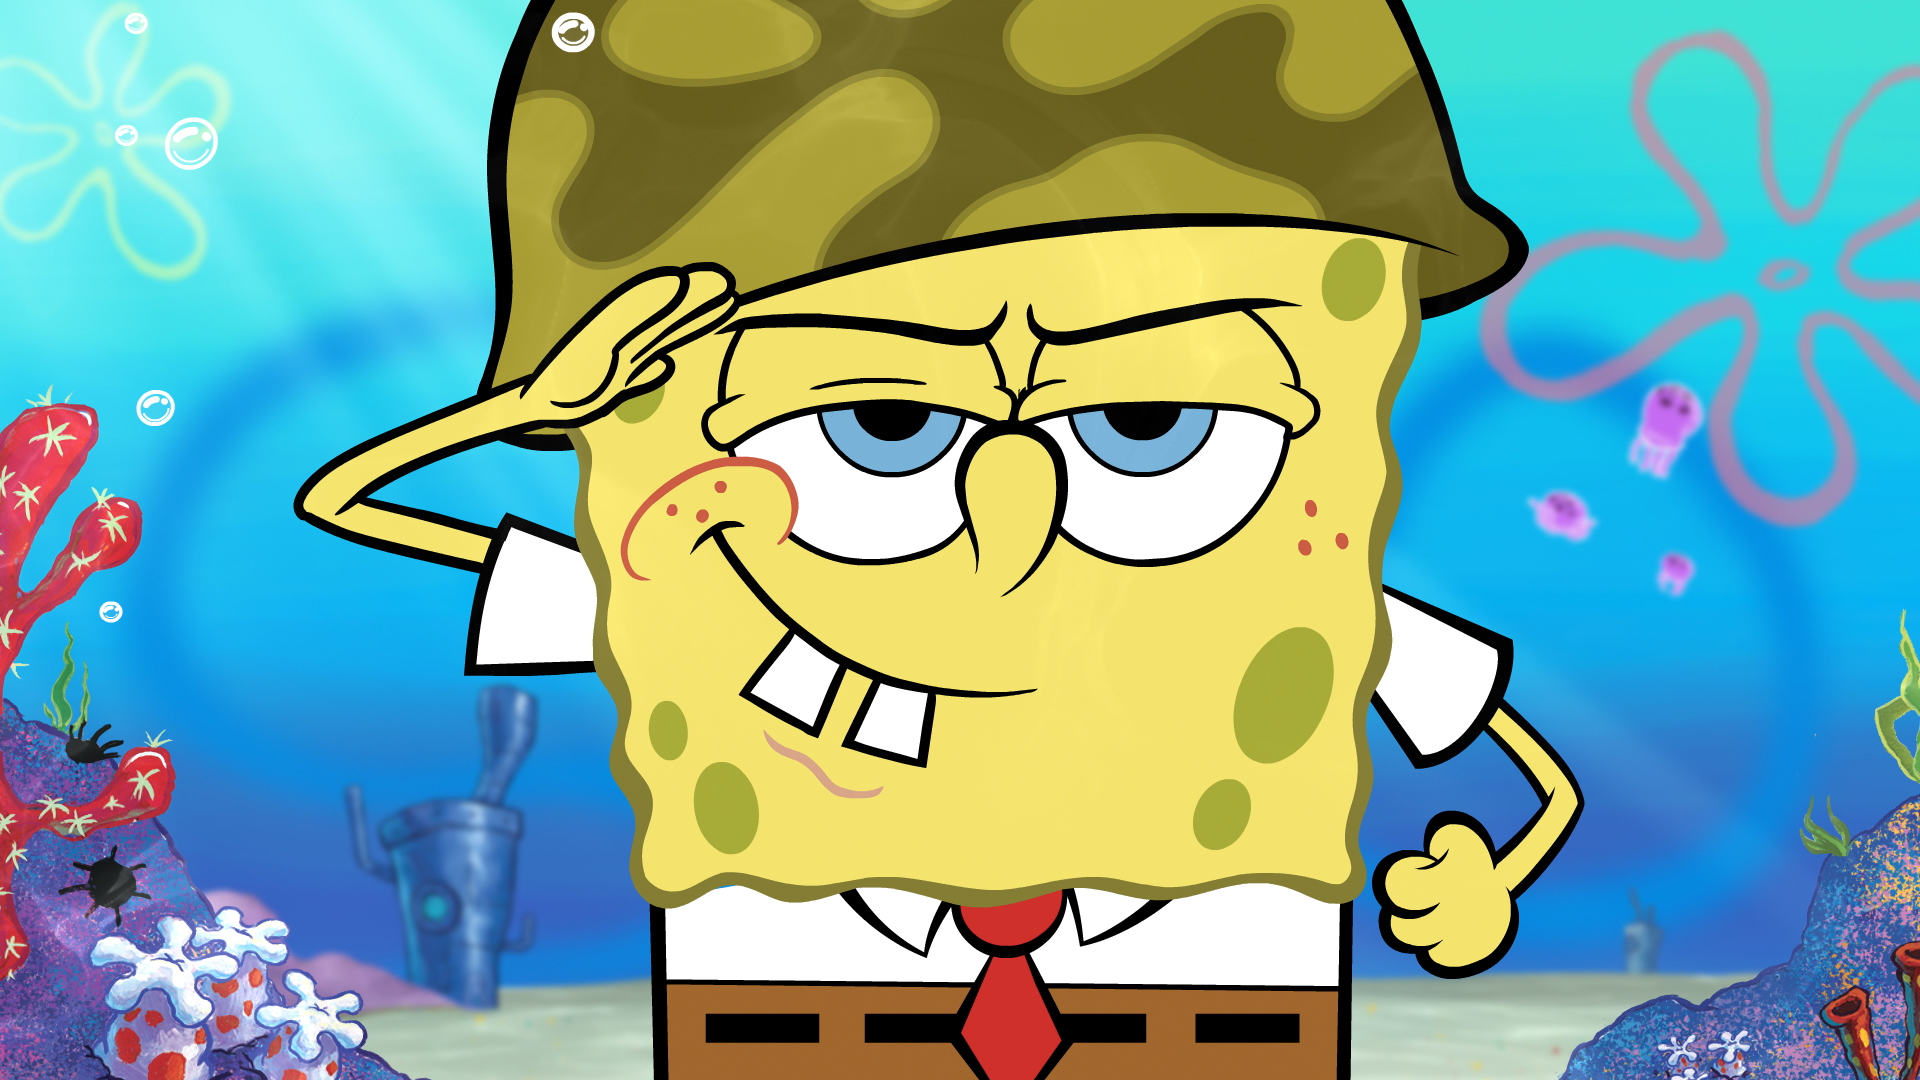 SpongeBob SquarePants: Battle for Bikini Bottom: Rehydrated